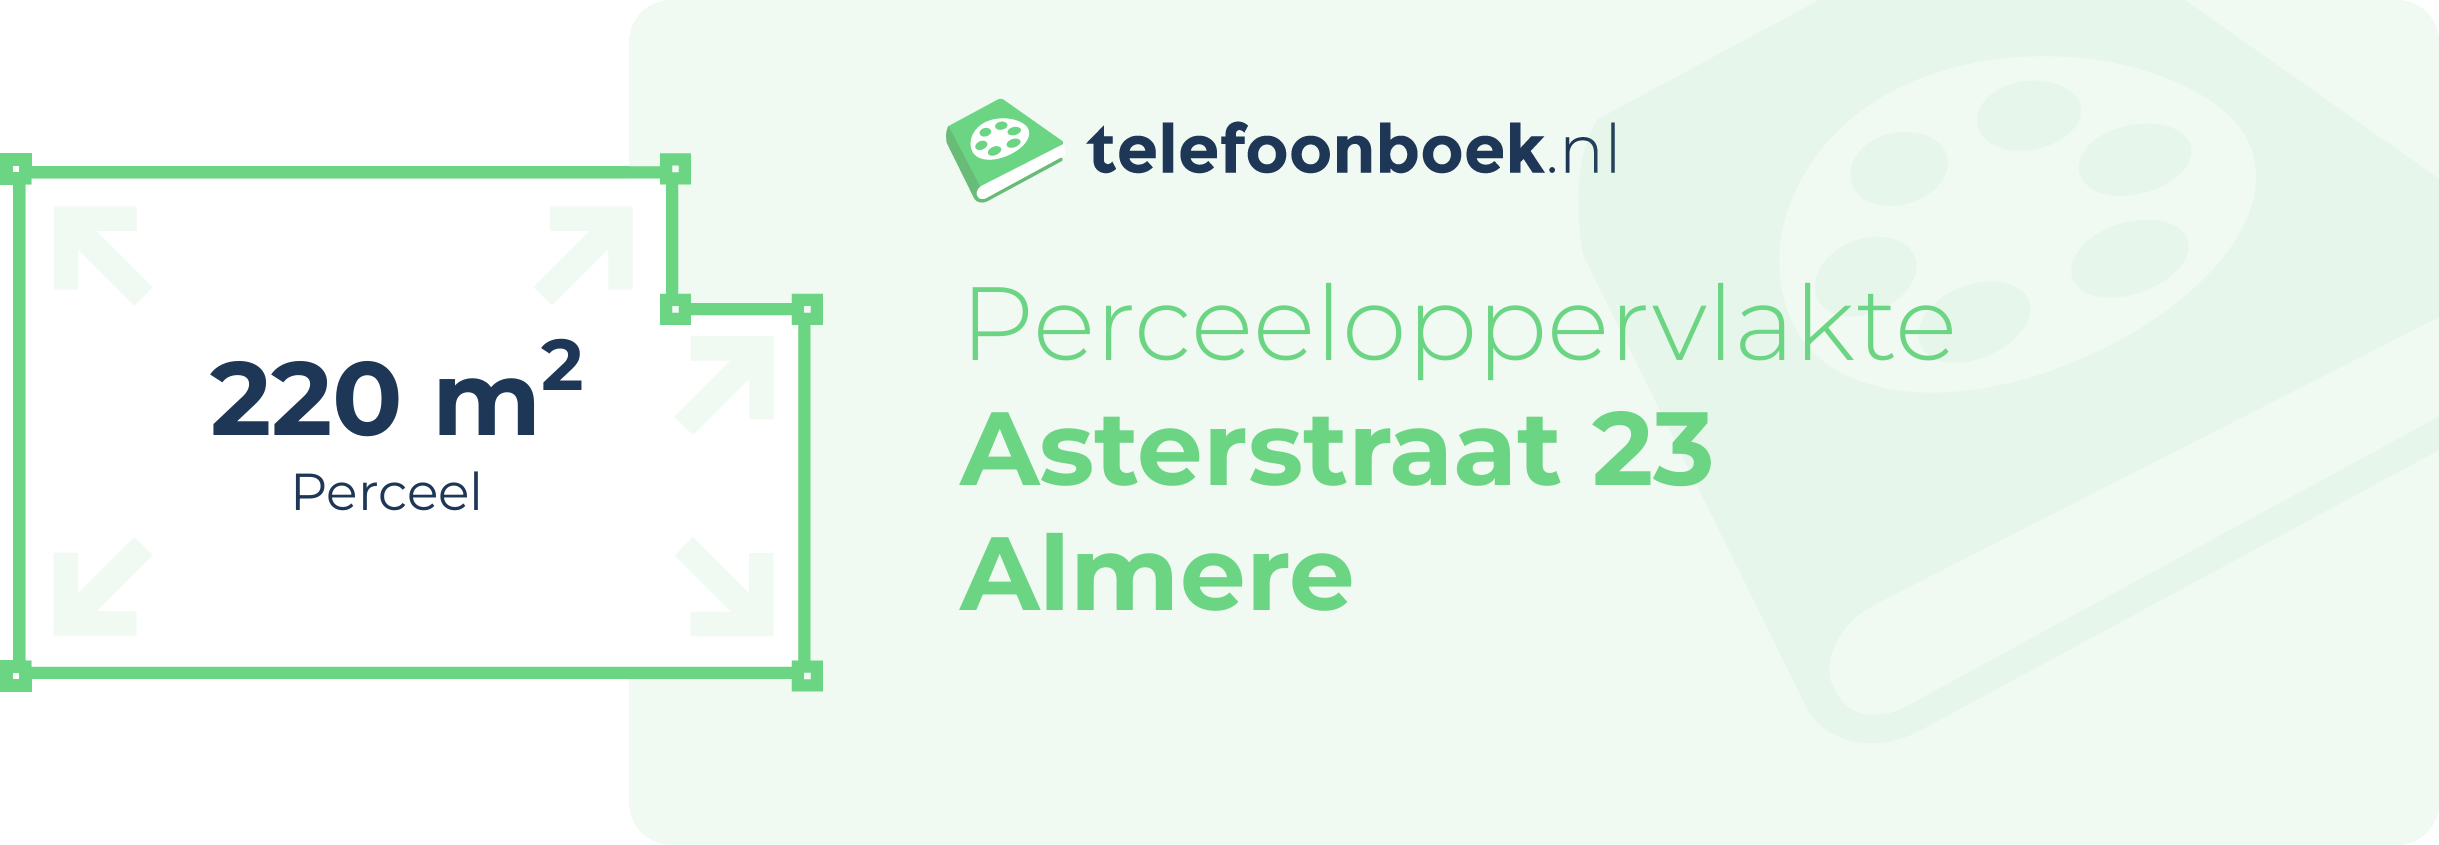 Perceeloppervlakte Asterstraat 23 Almere